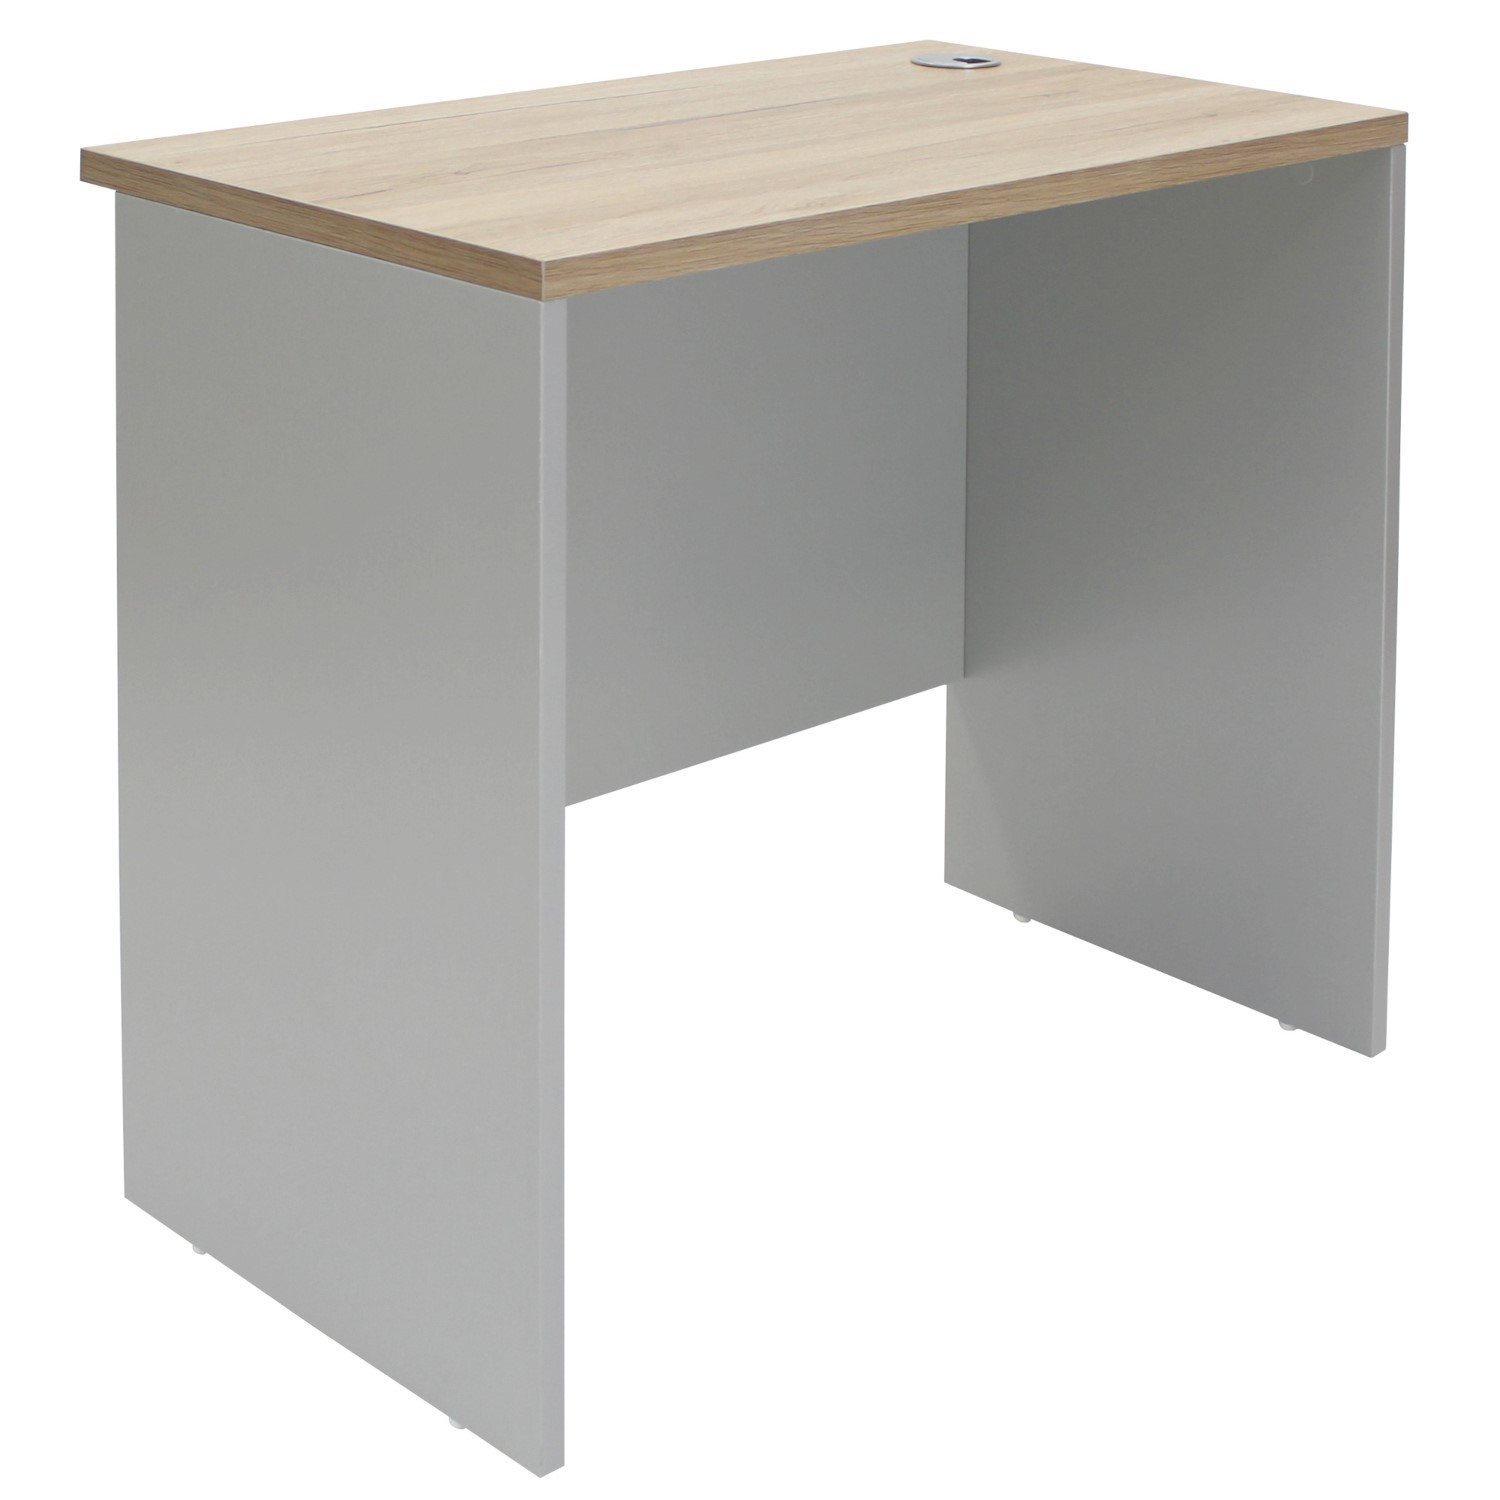 Read more about Medium light grey and oak office desk denver